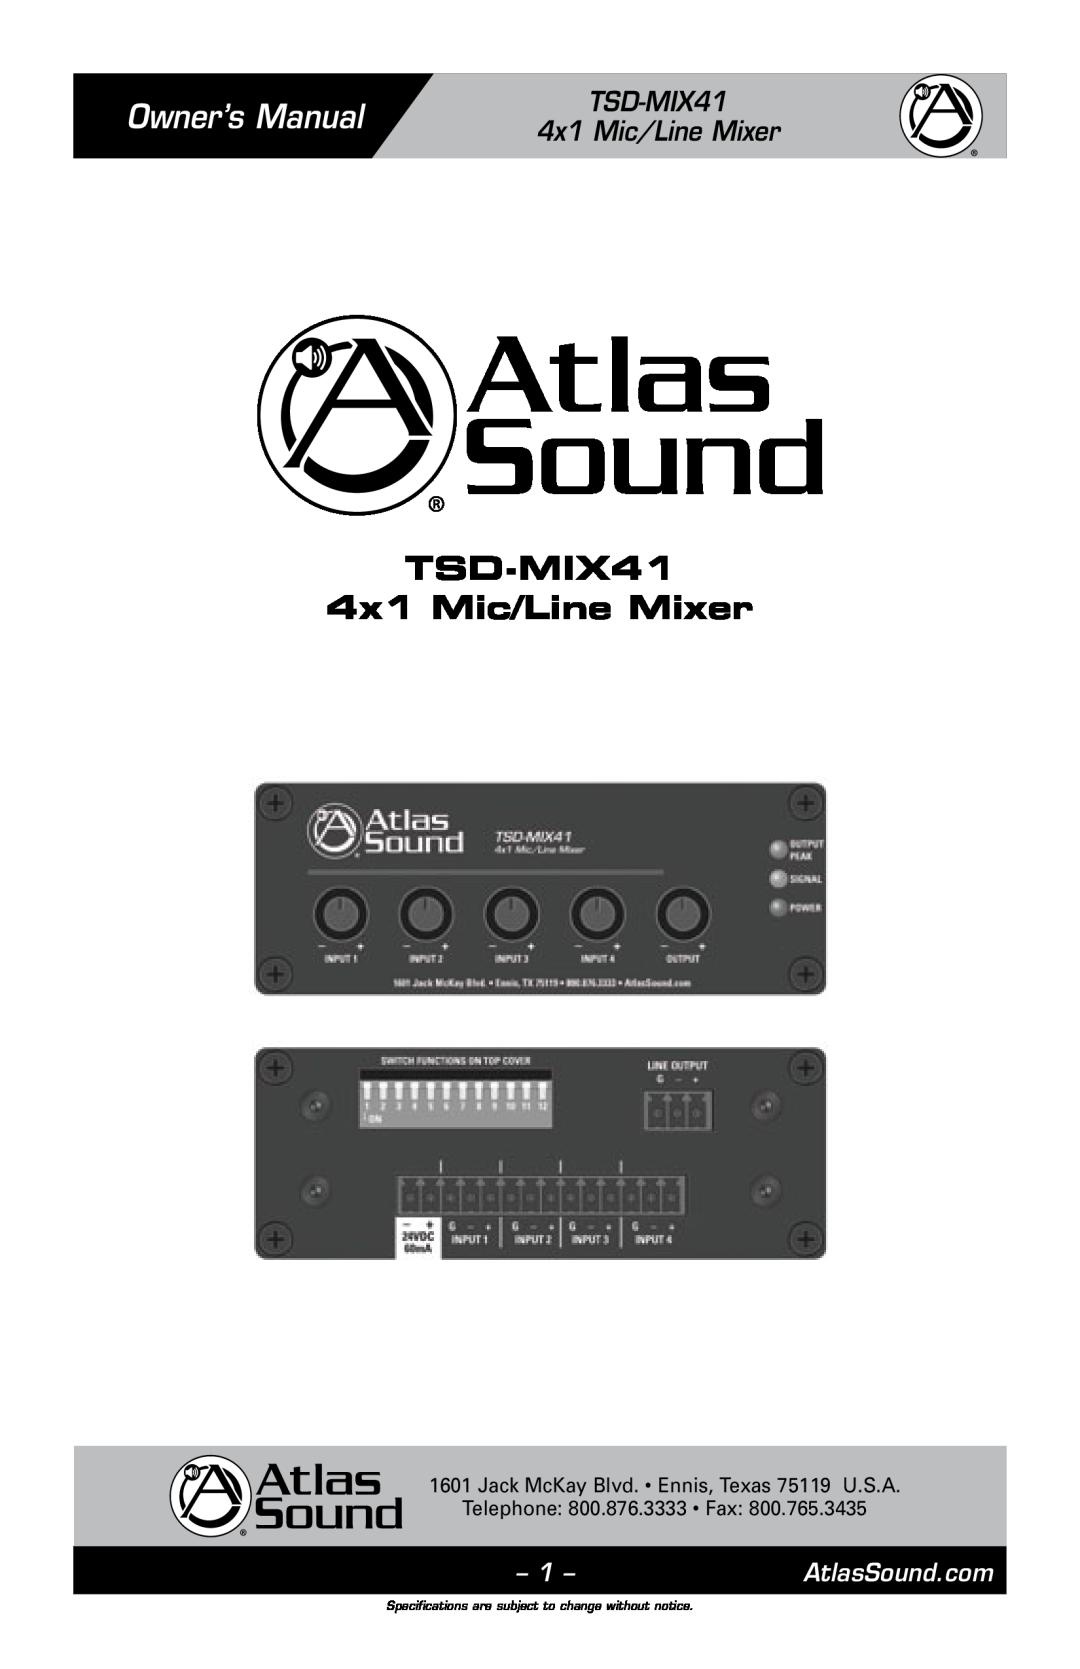 Atlas Sound owner manual Owner’s Manual, TSD-MIX41 4x1 Mic/Line Mixer, AtlasSound.com, Telephone 800.876.3333 Fax 